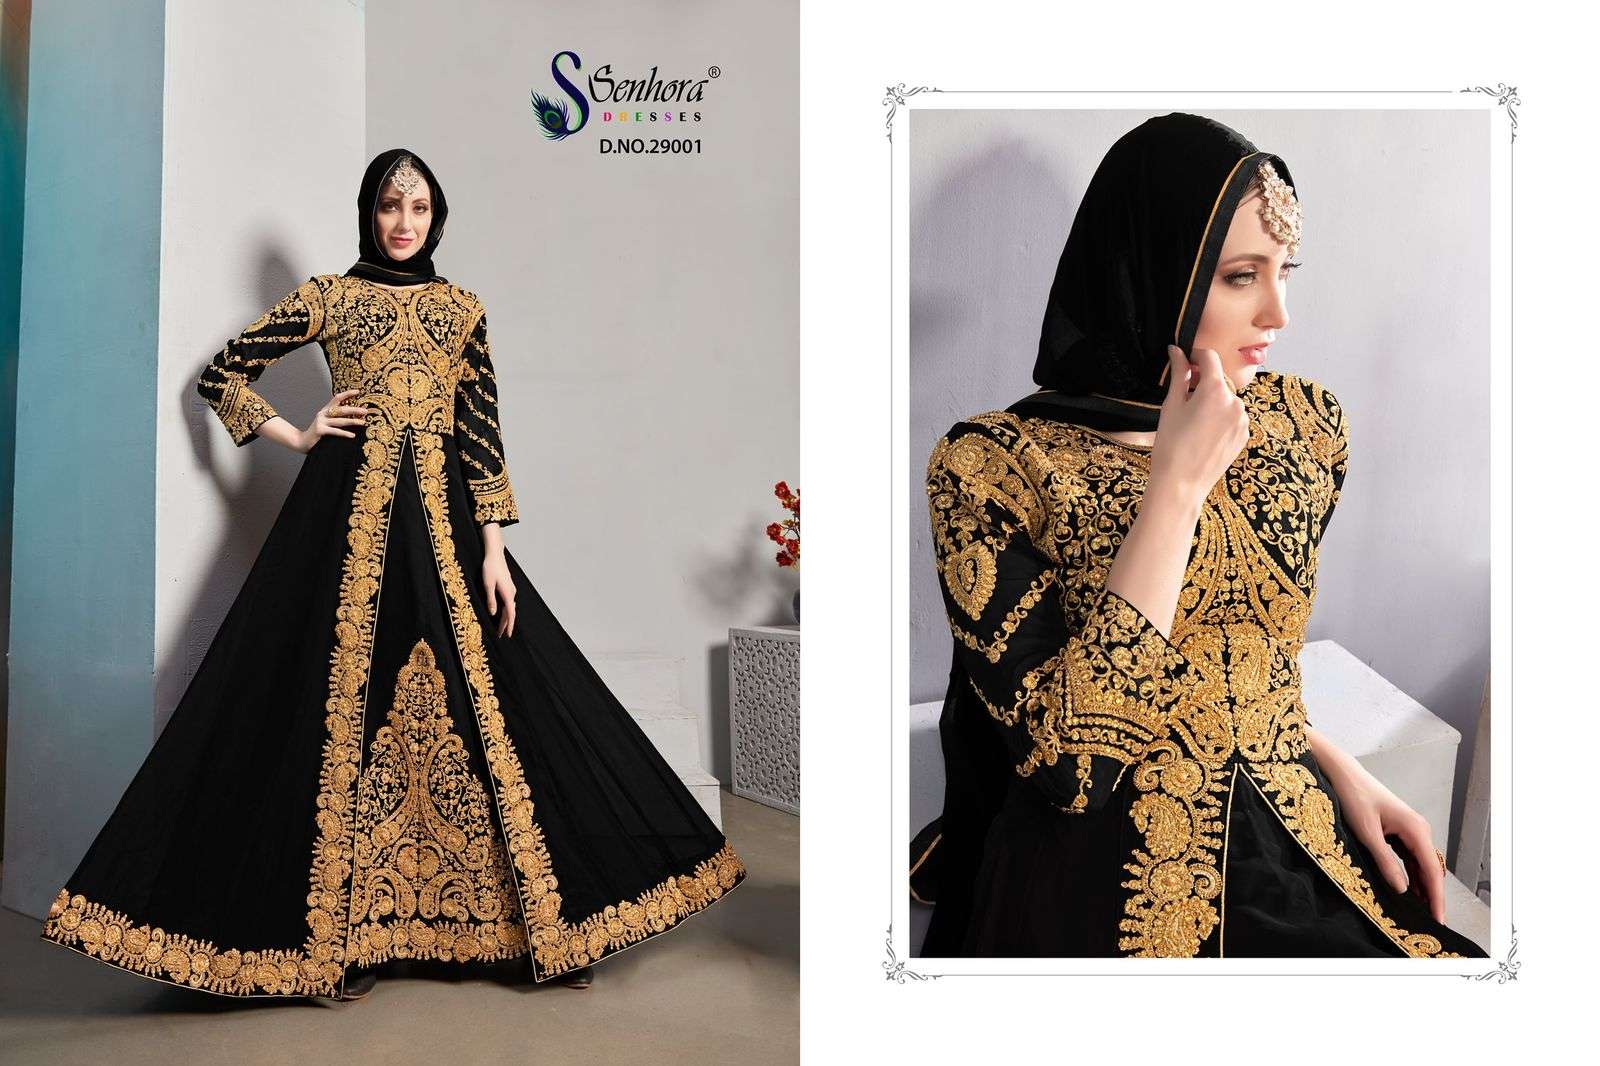 Senhora Dresses catalogue afrin vol 29 design number 29001 to 29004 hijab style duppta heavy fancy suits collection for dubai boutique taste 